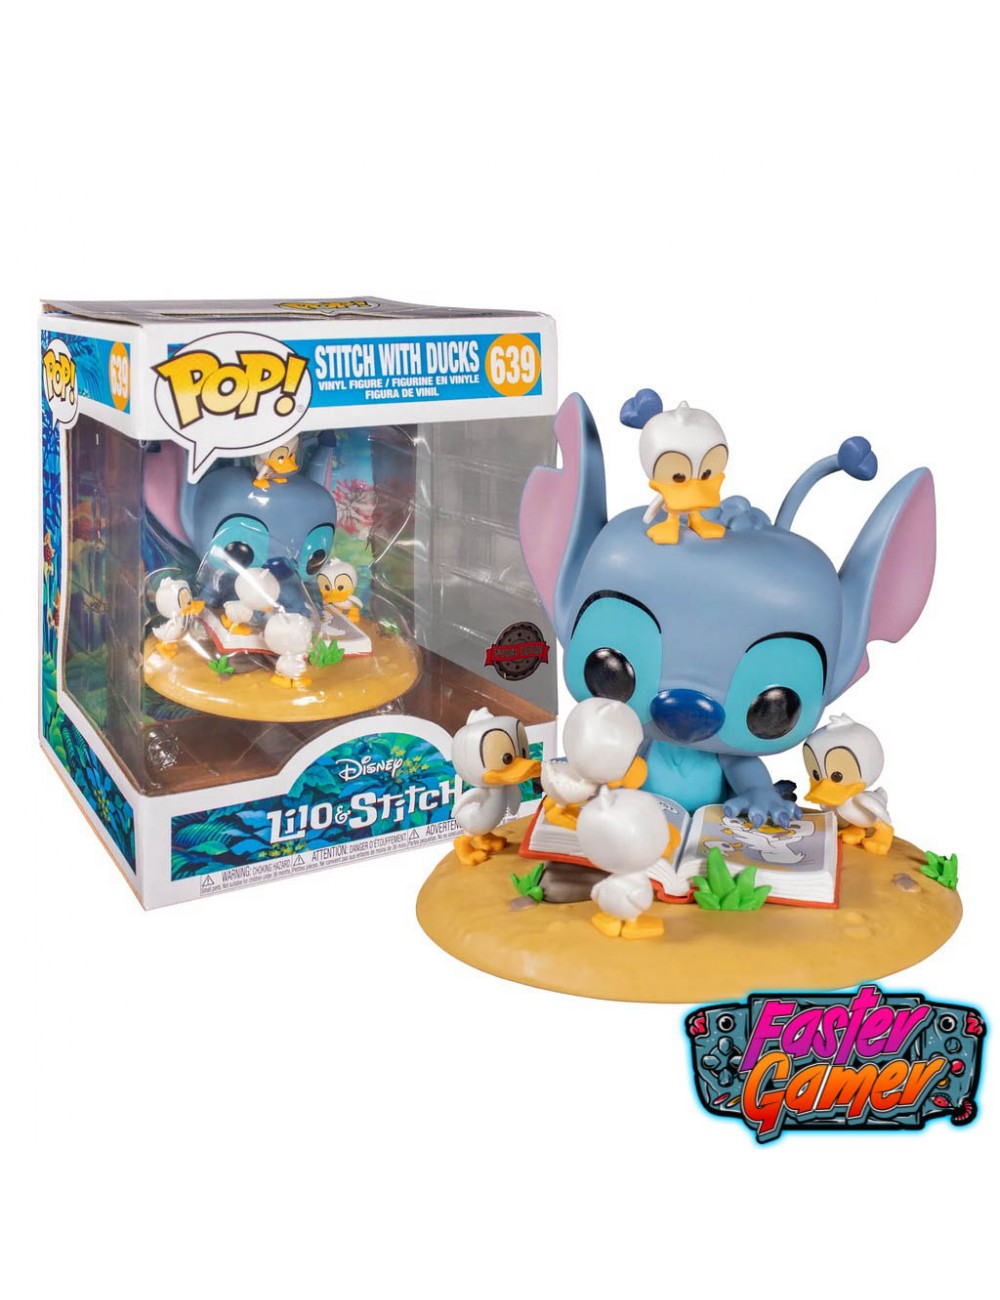 Disney Lilo and Stich Pop! Vinyl figurine Stitch With Ducks